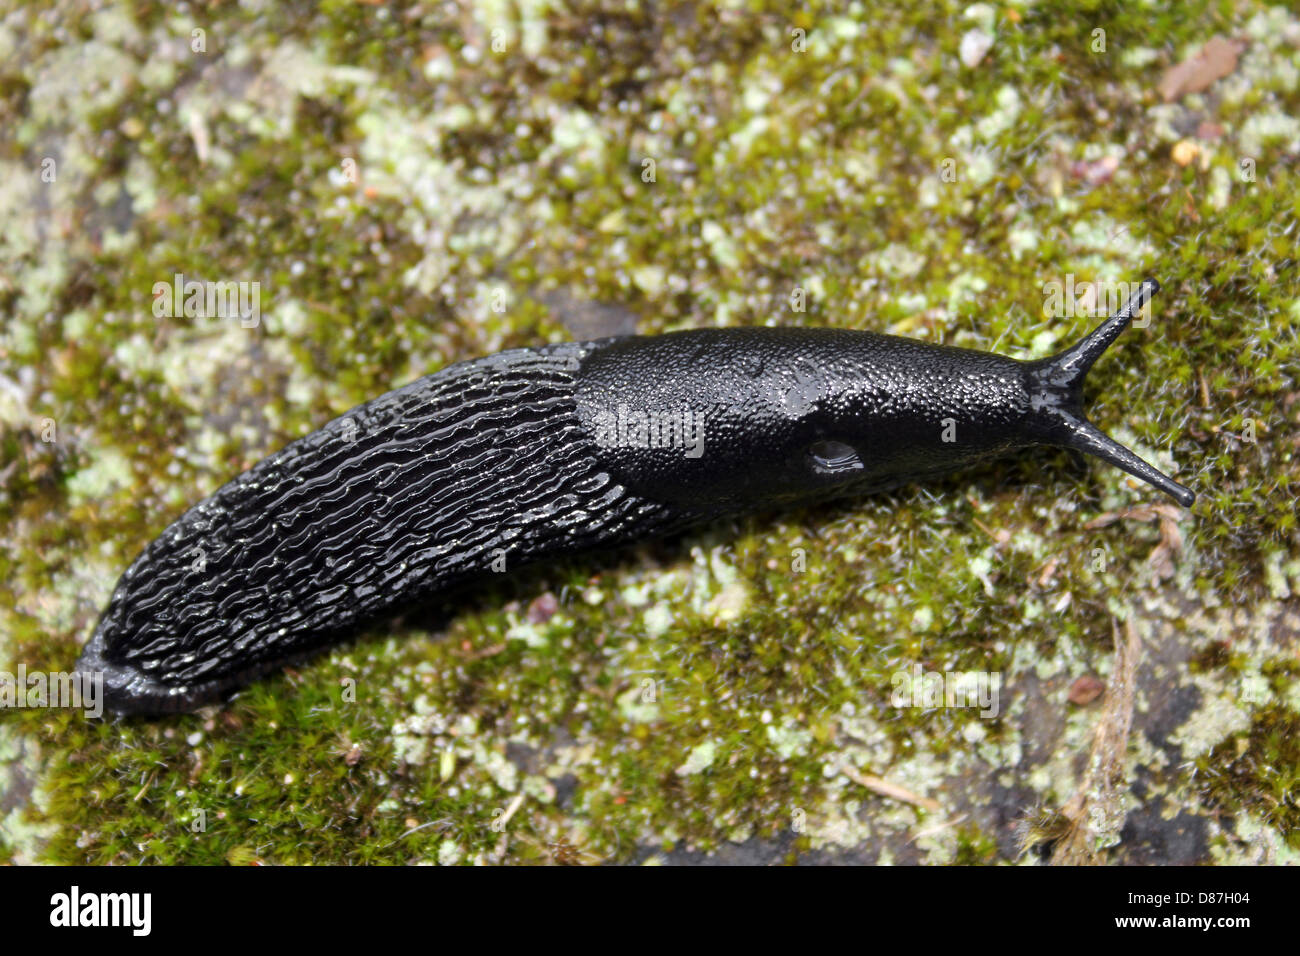 Black Slug Arion ater Stock Photo